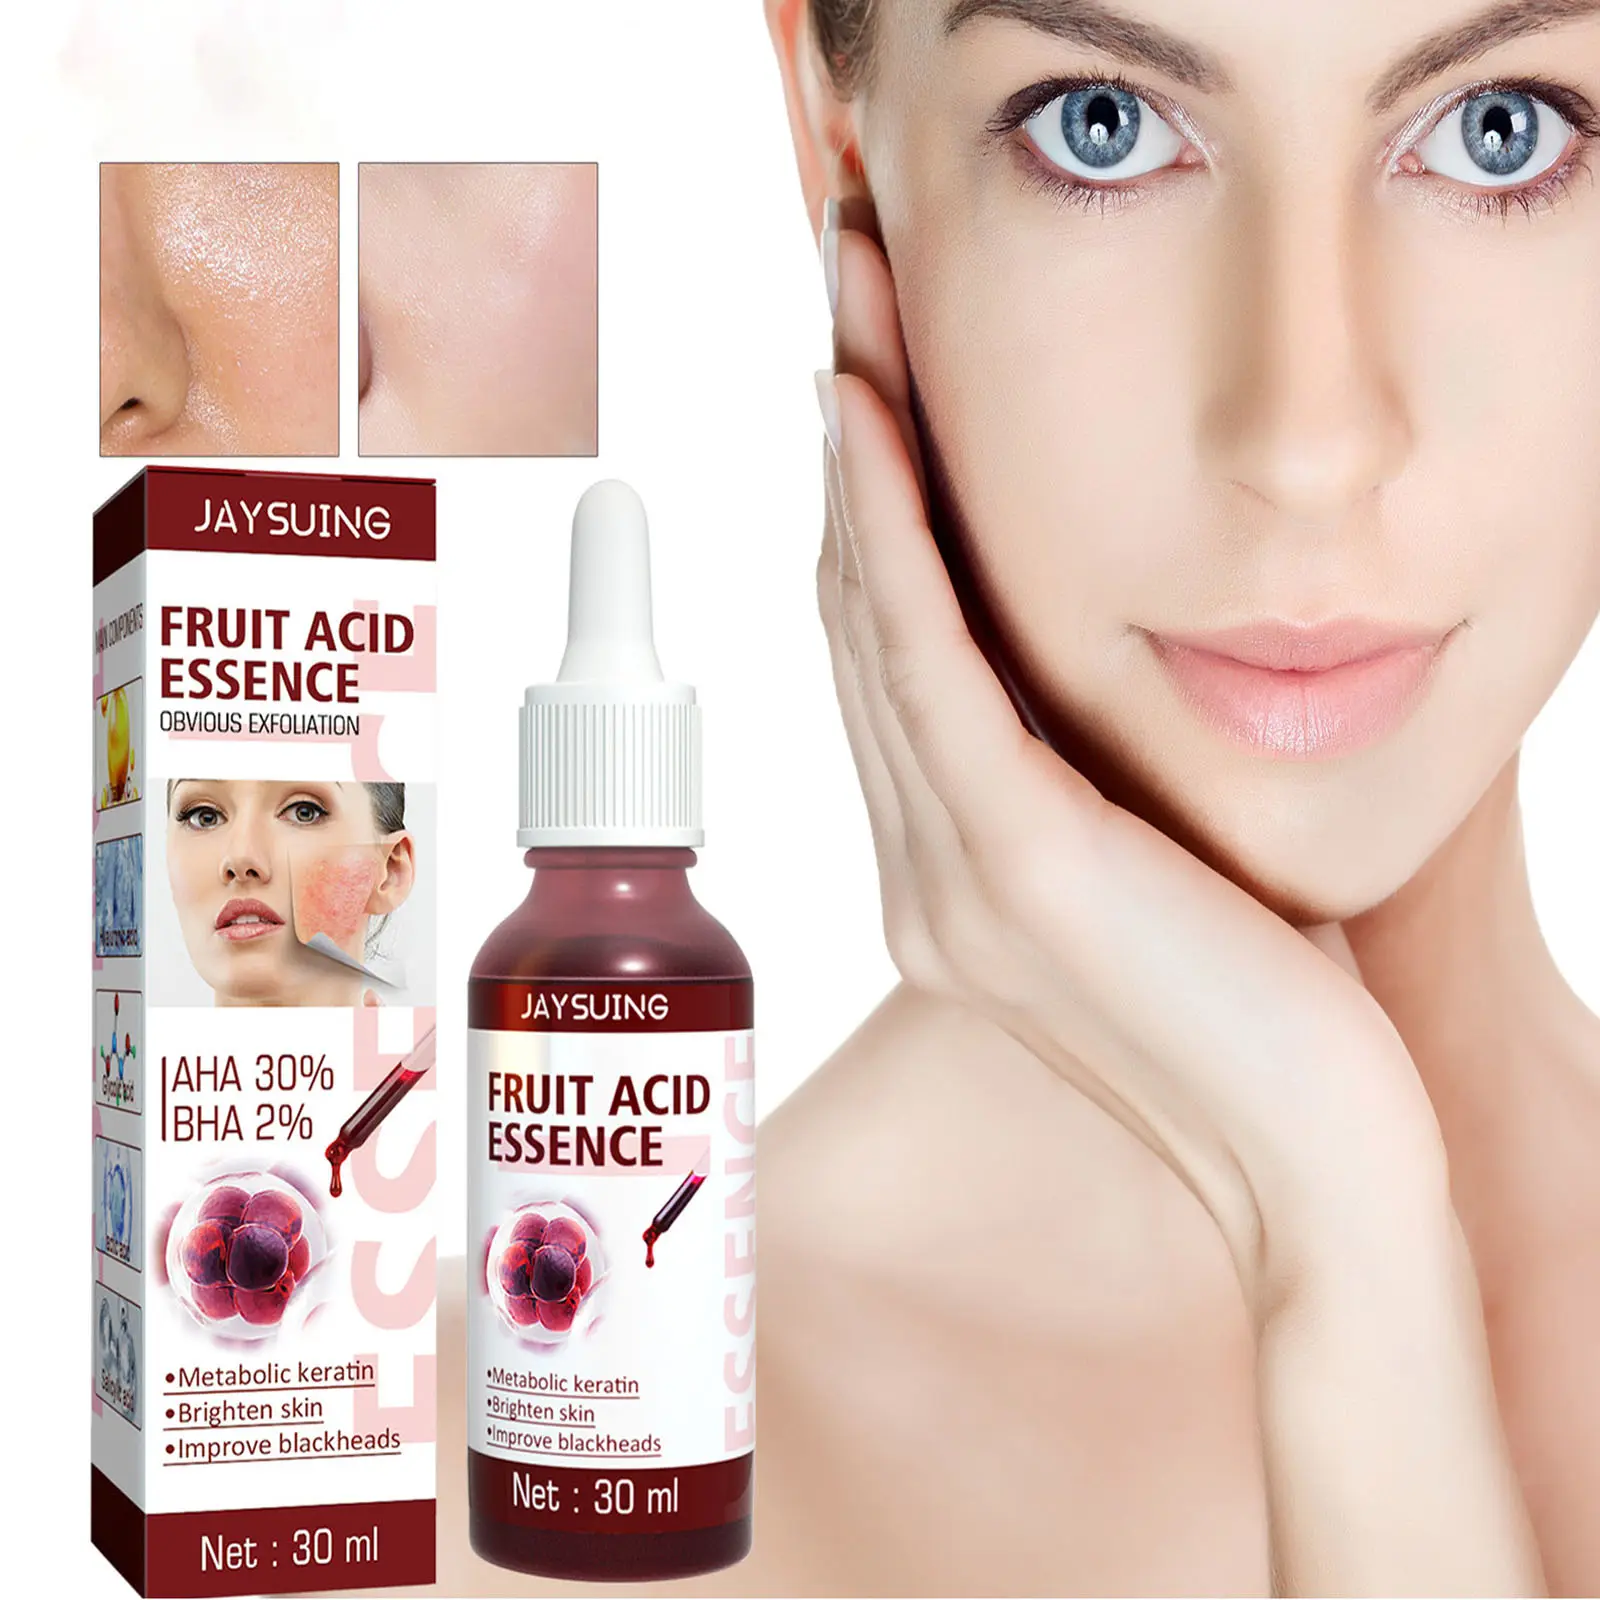 Fruit acid base solution to remove blackheads and acne, clean pores, soften cutin, brighten skin tone, repair essence